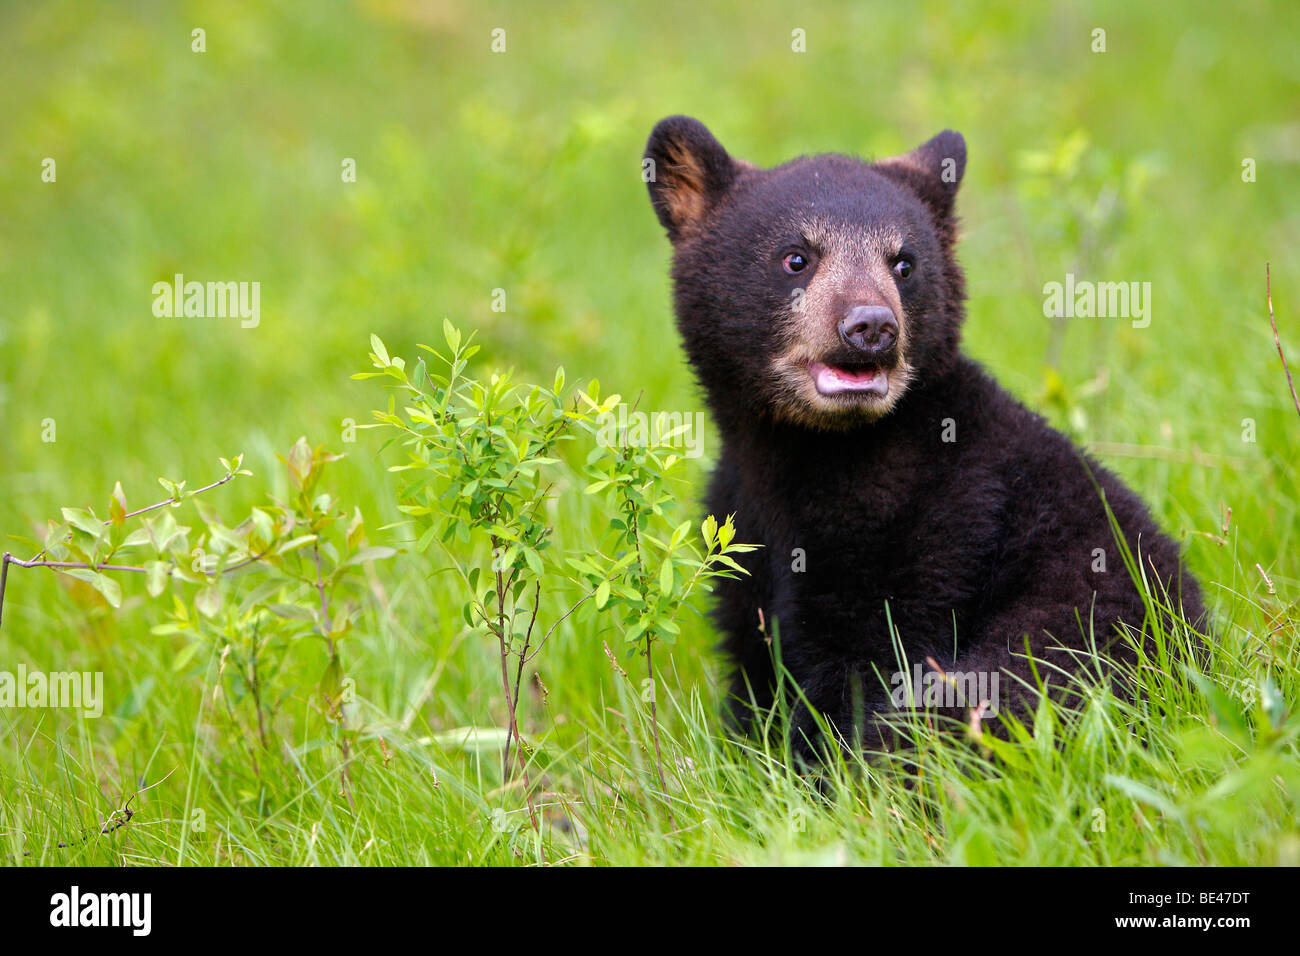 American Black Bear (Ursus americanus). Four month old cub sitting in grass. Stock Photo